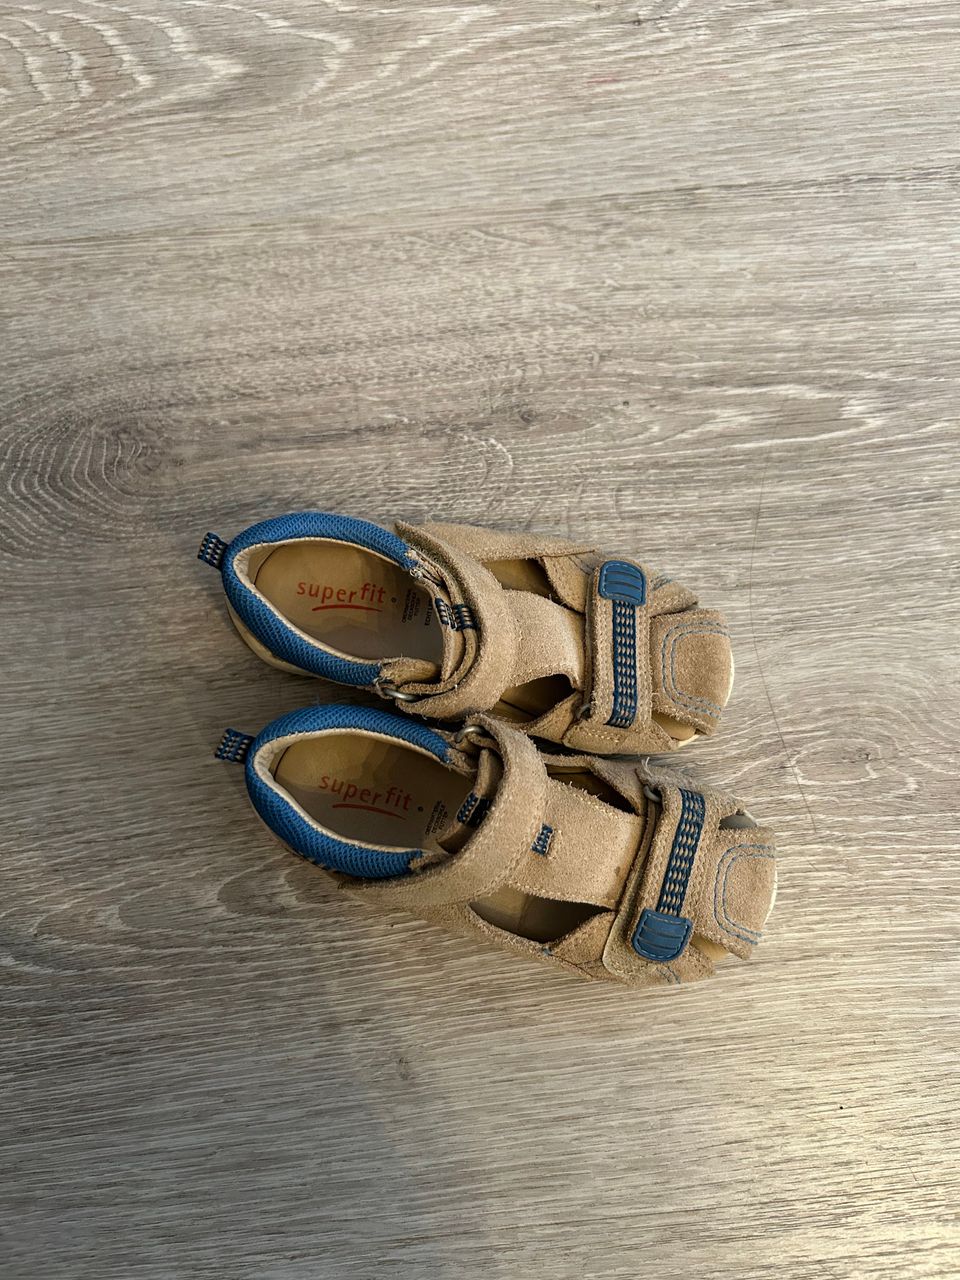 Super fit laadukkaat sandaalit